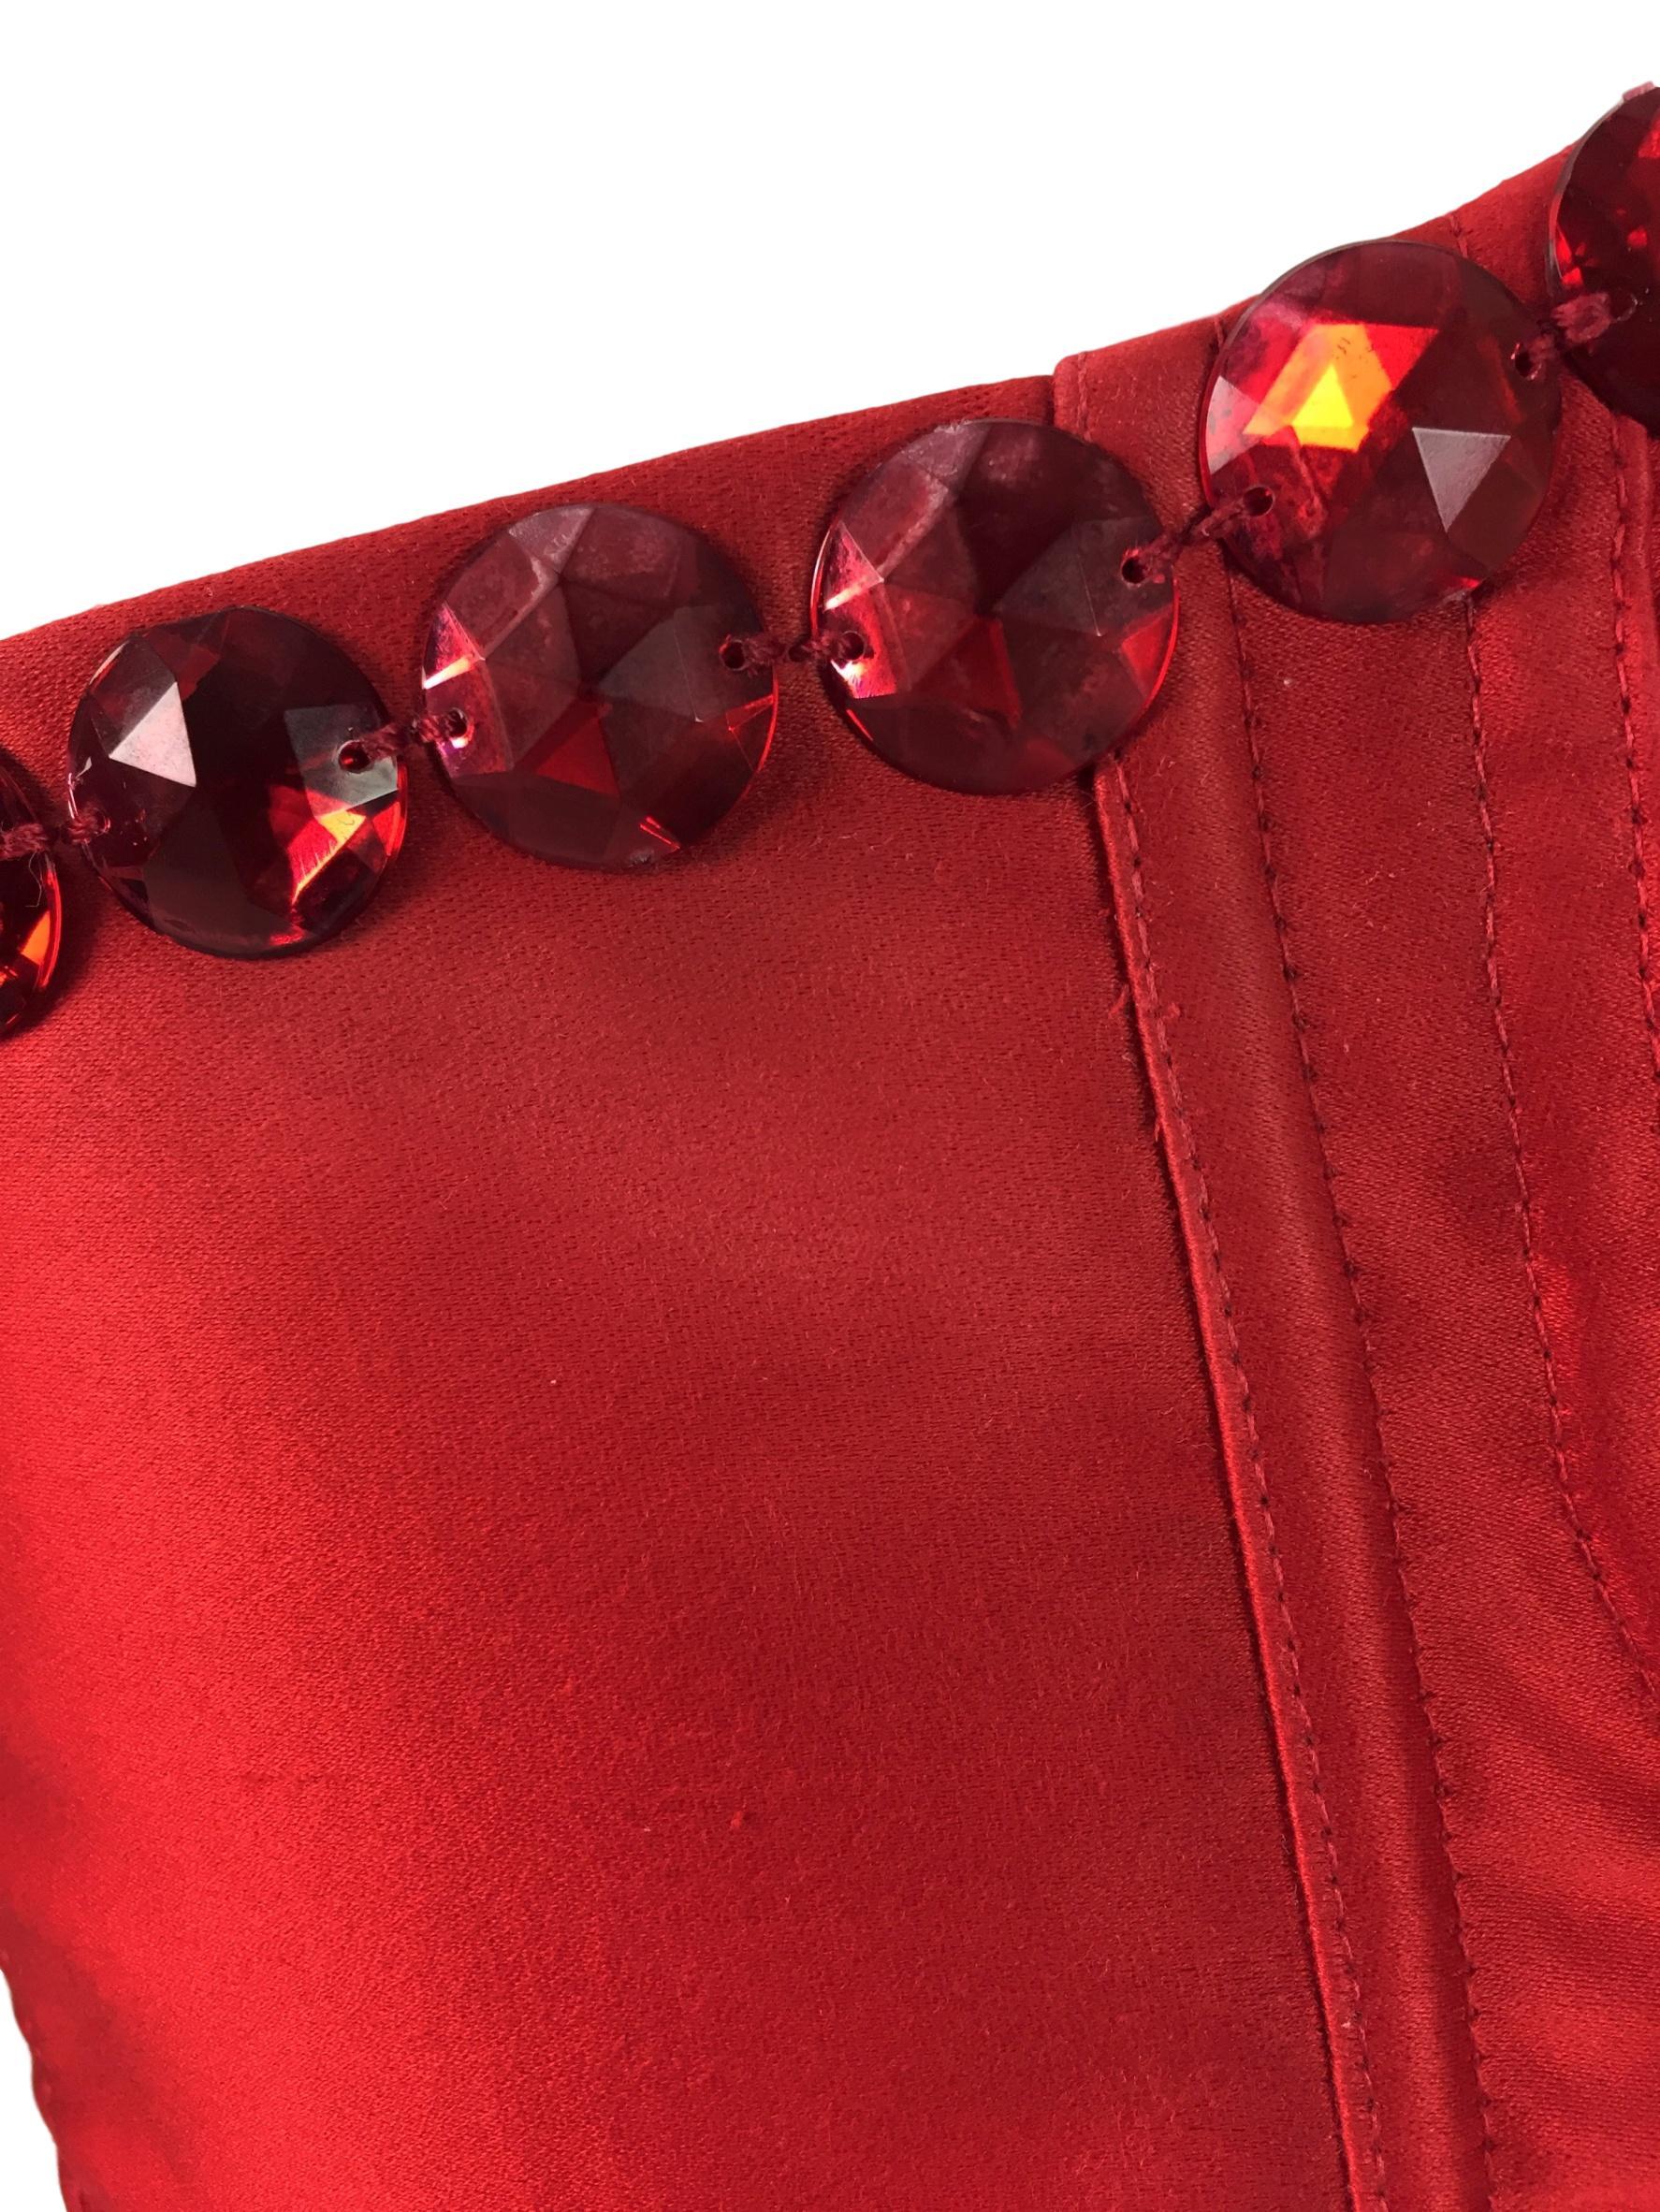 S/S 1992 Dolce & Gabbana Runway SEX & LOVE Red Crystal Corset Bustier Crop Top 4